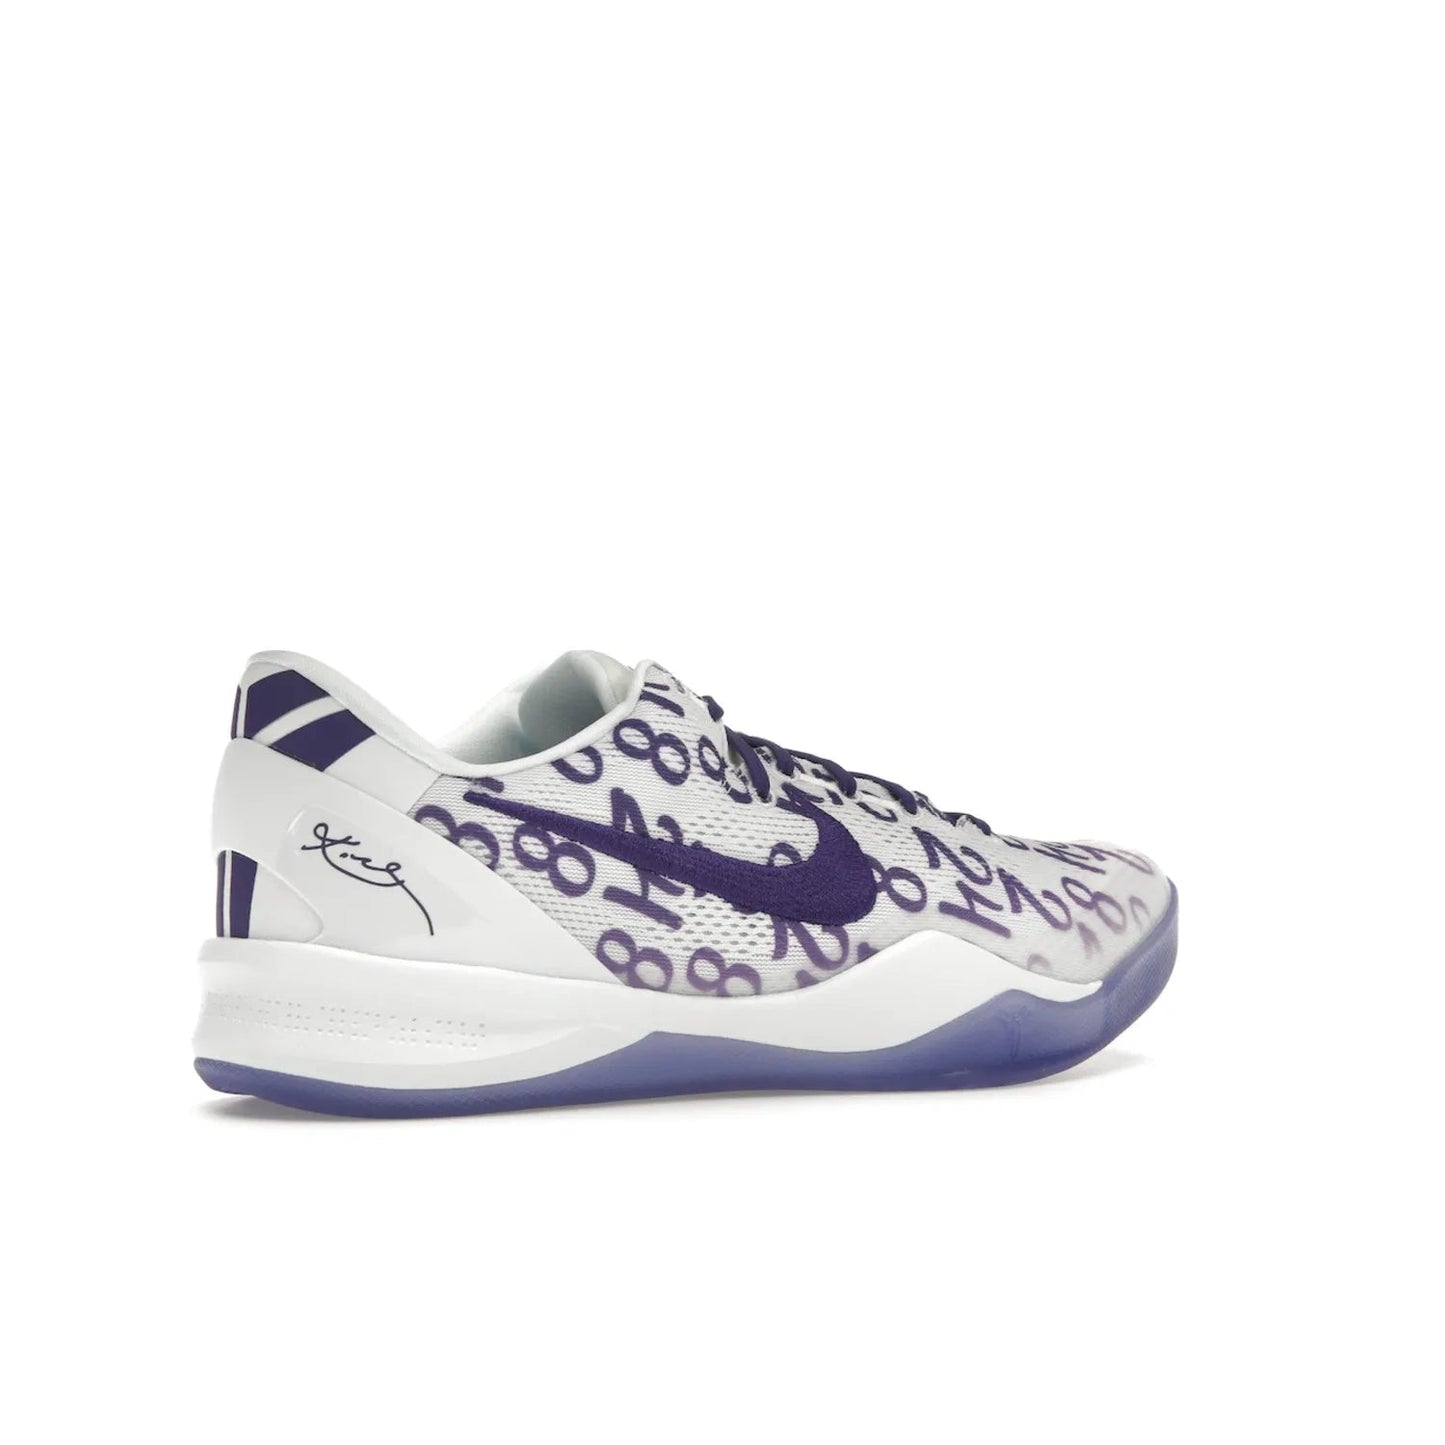 Nike Kobe 8 Protro Court Purple - Image 34 - Only at www.BallersClubKickz.com - 